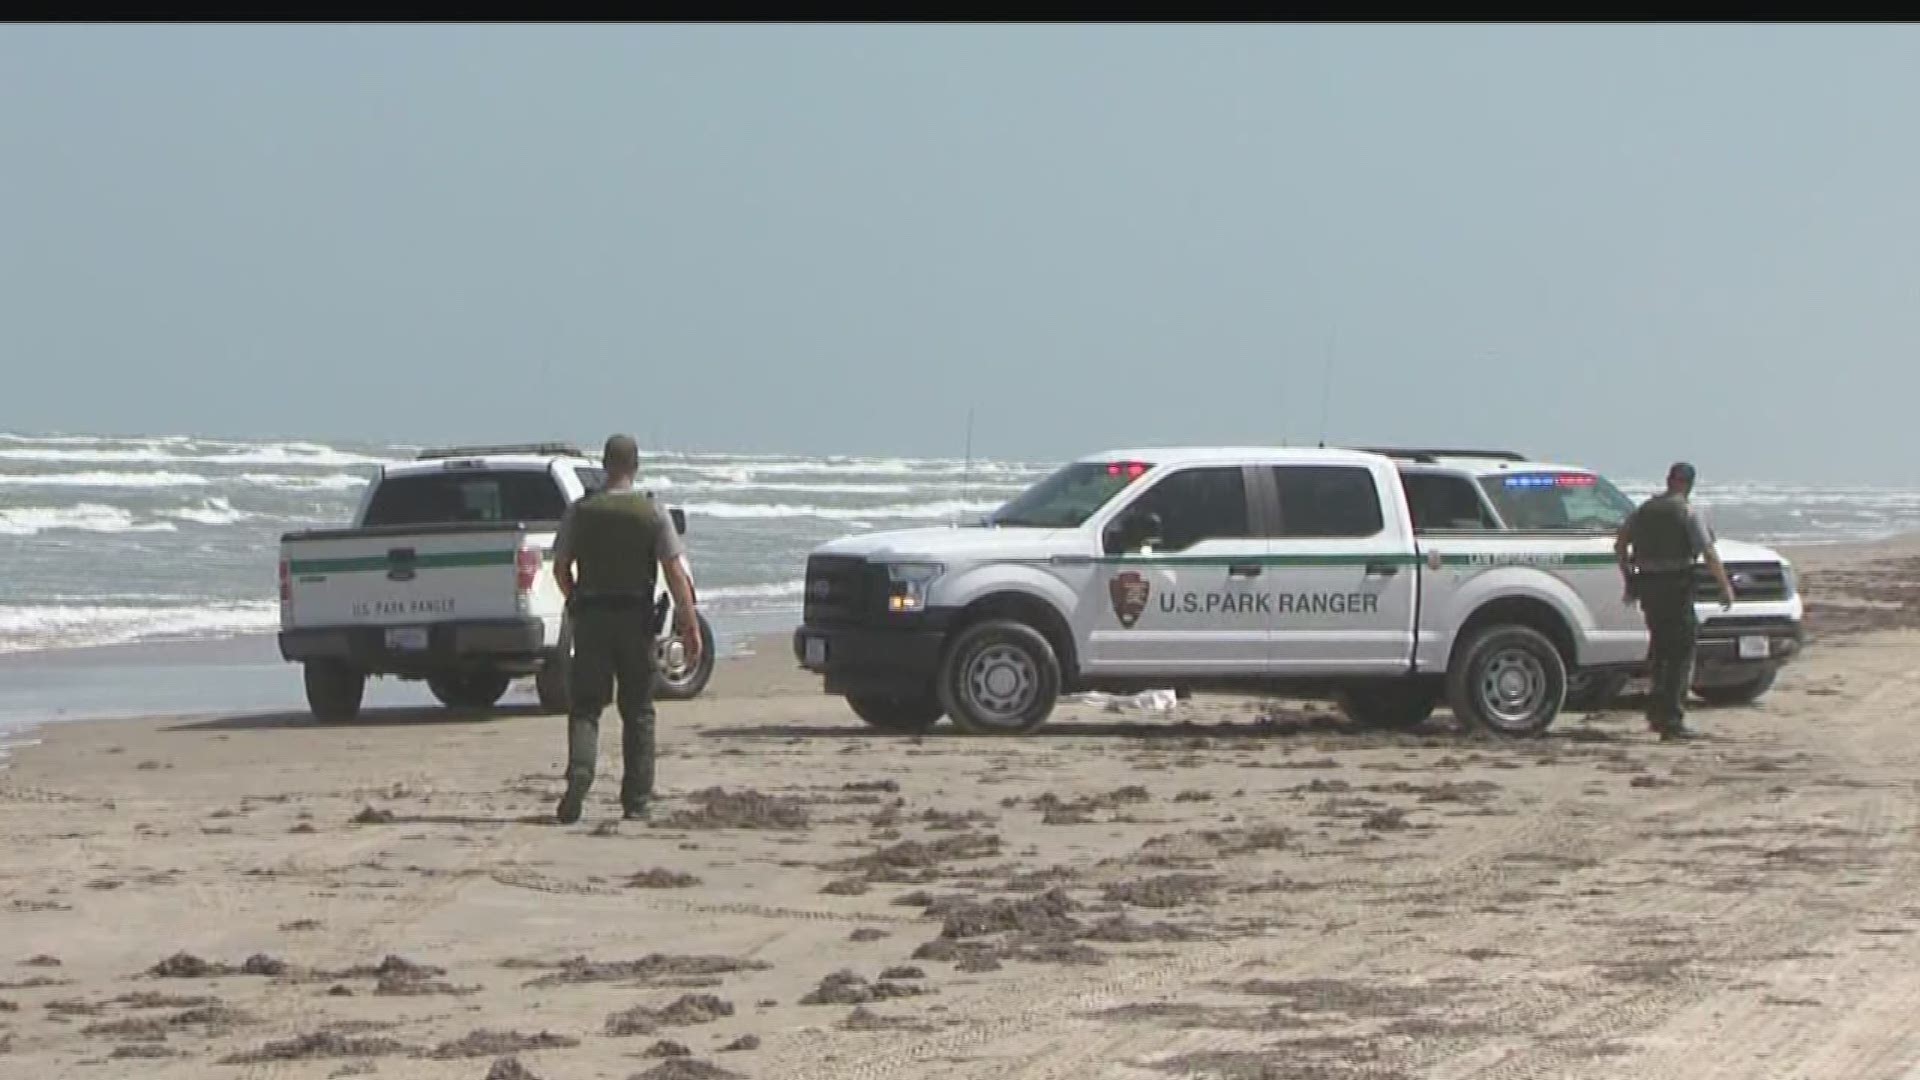 Possible drowning victim at Padre Island National Seashore identified